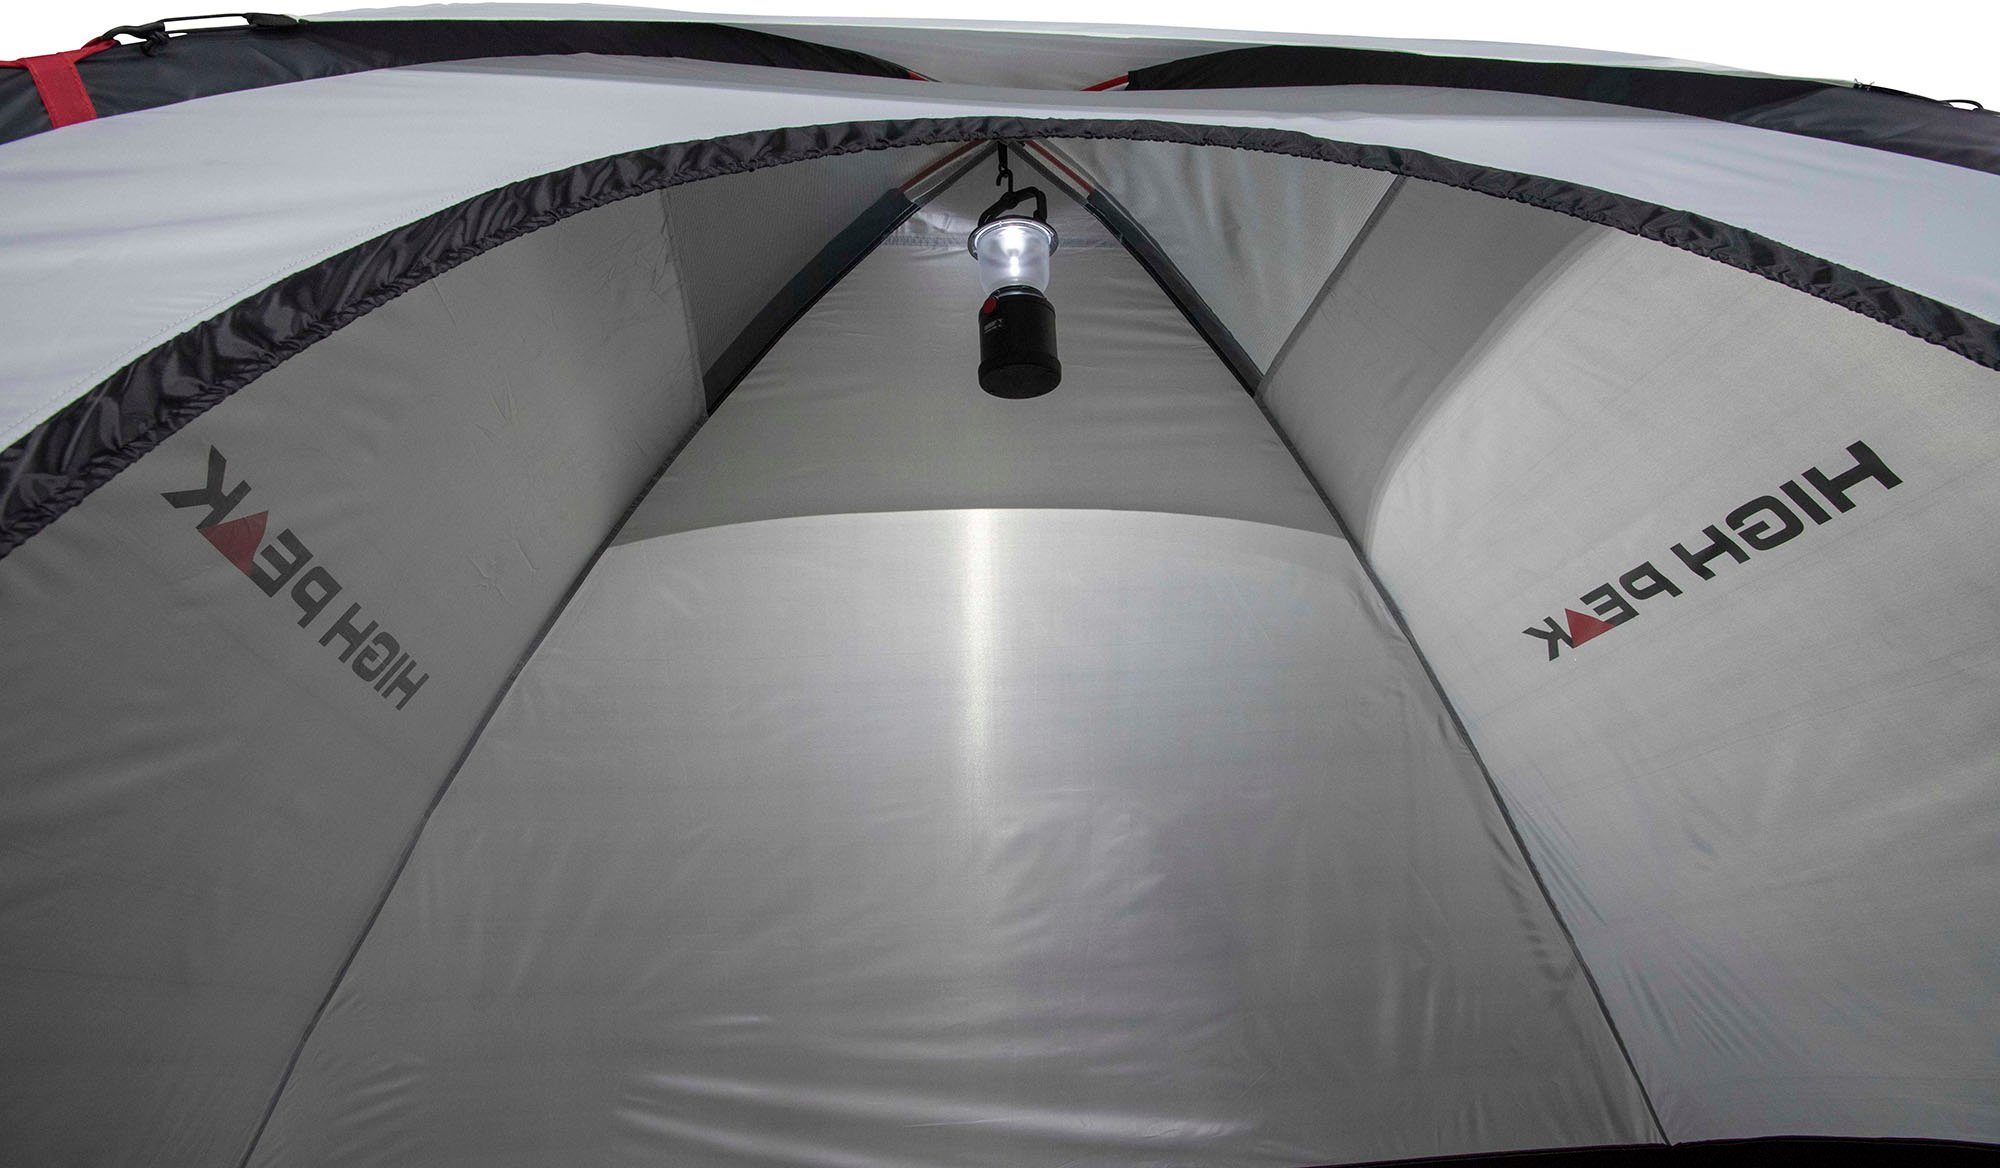 High Peak Kuppelzelt Zelt Monodome (mit Transporttasche) 4 pearl XL, Personen